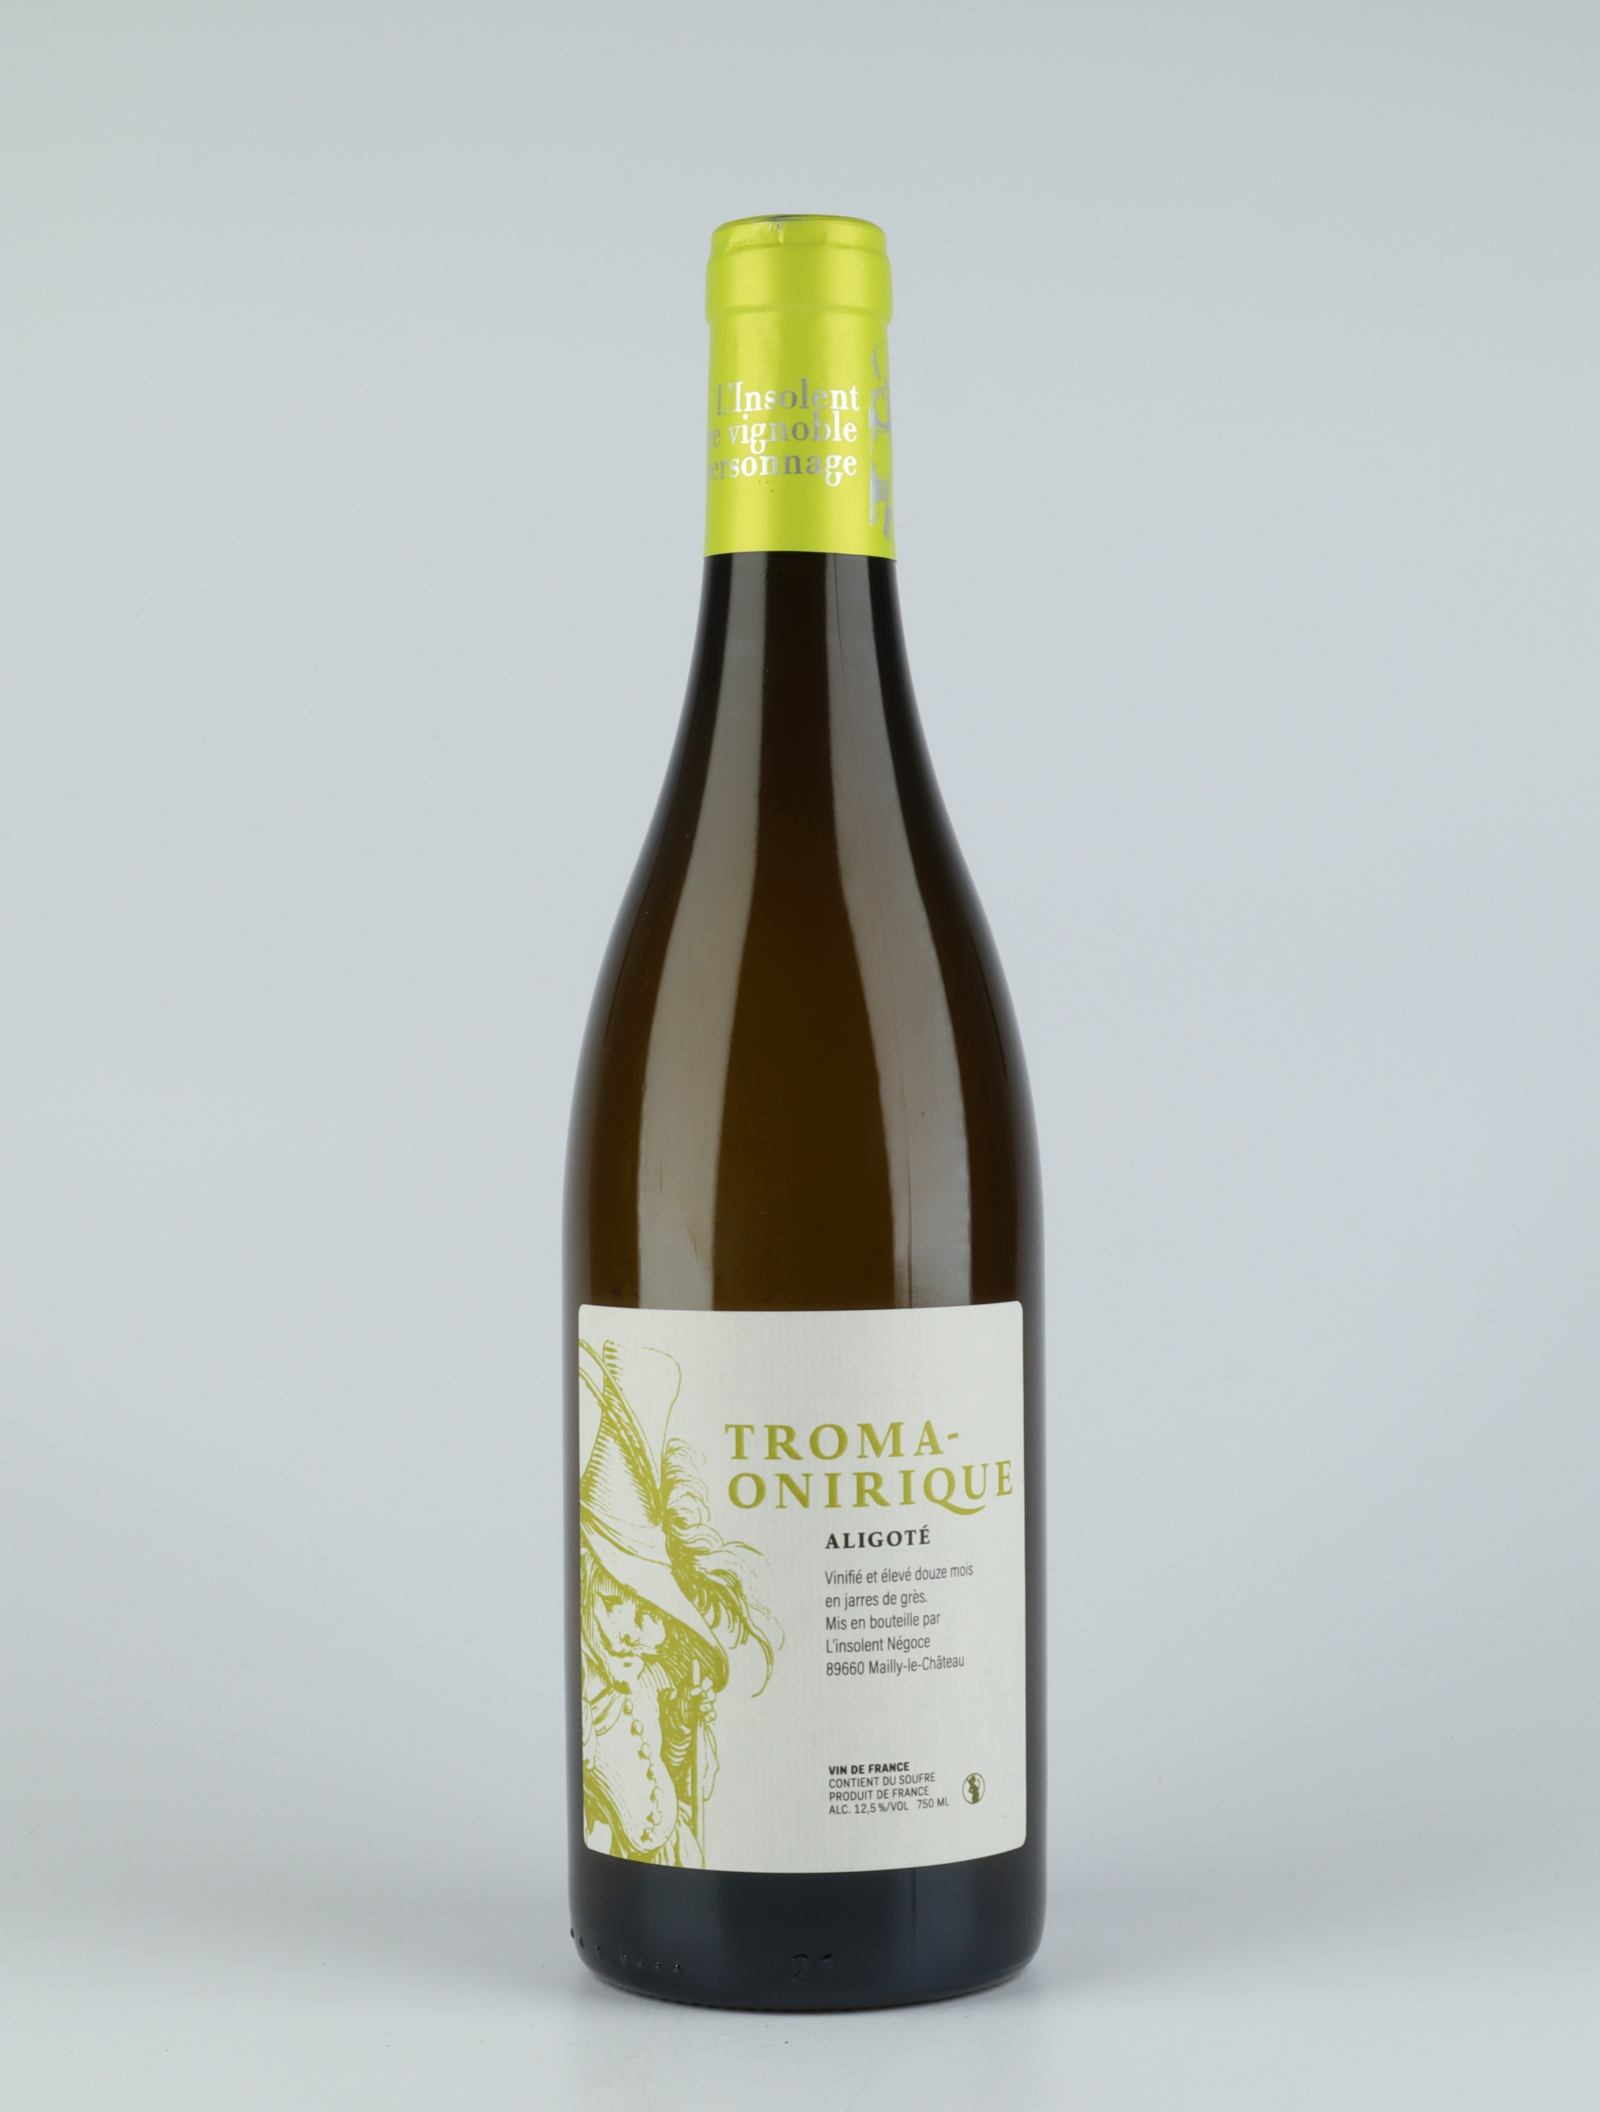 A bottle 2018 Troma-Onirique White wine from François Ecot, Burgundy in France